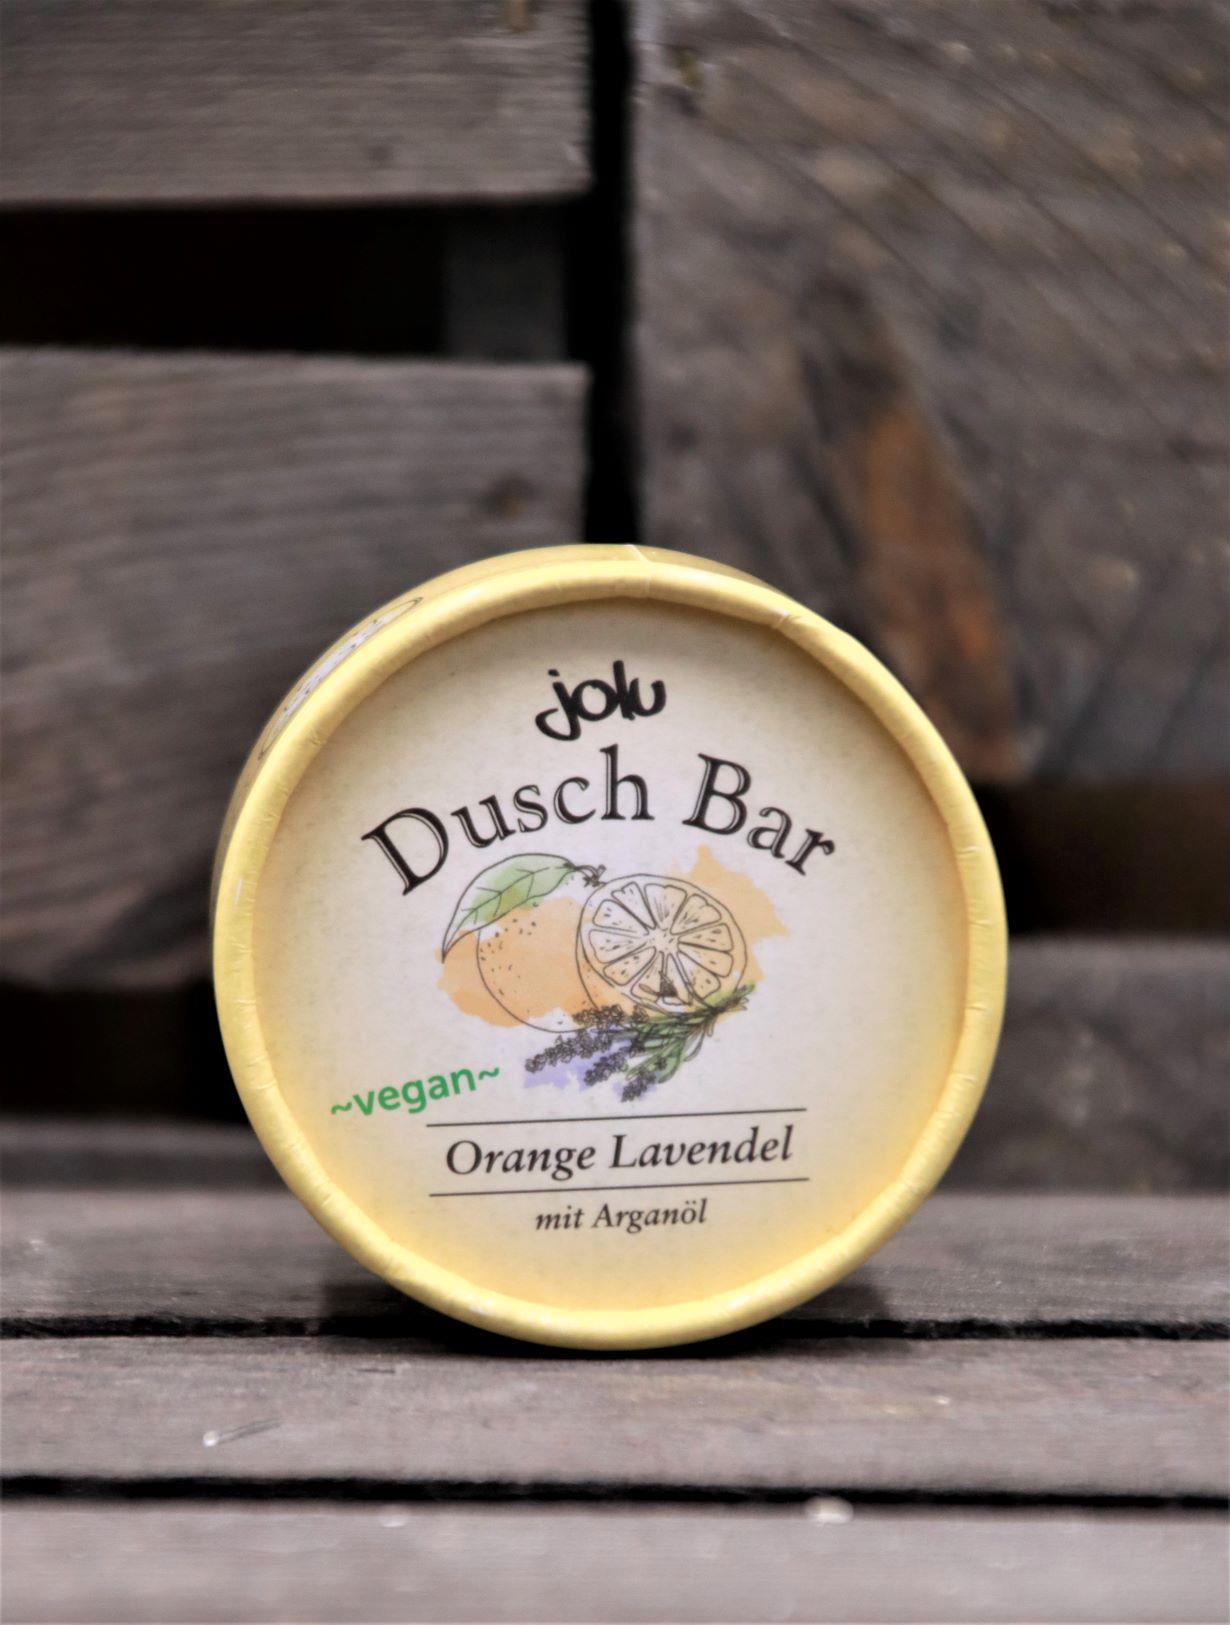 Dusch Bar Orange Lavendel